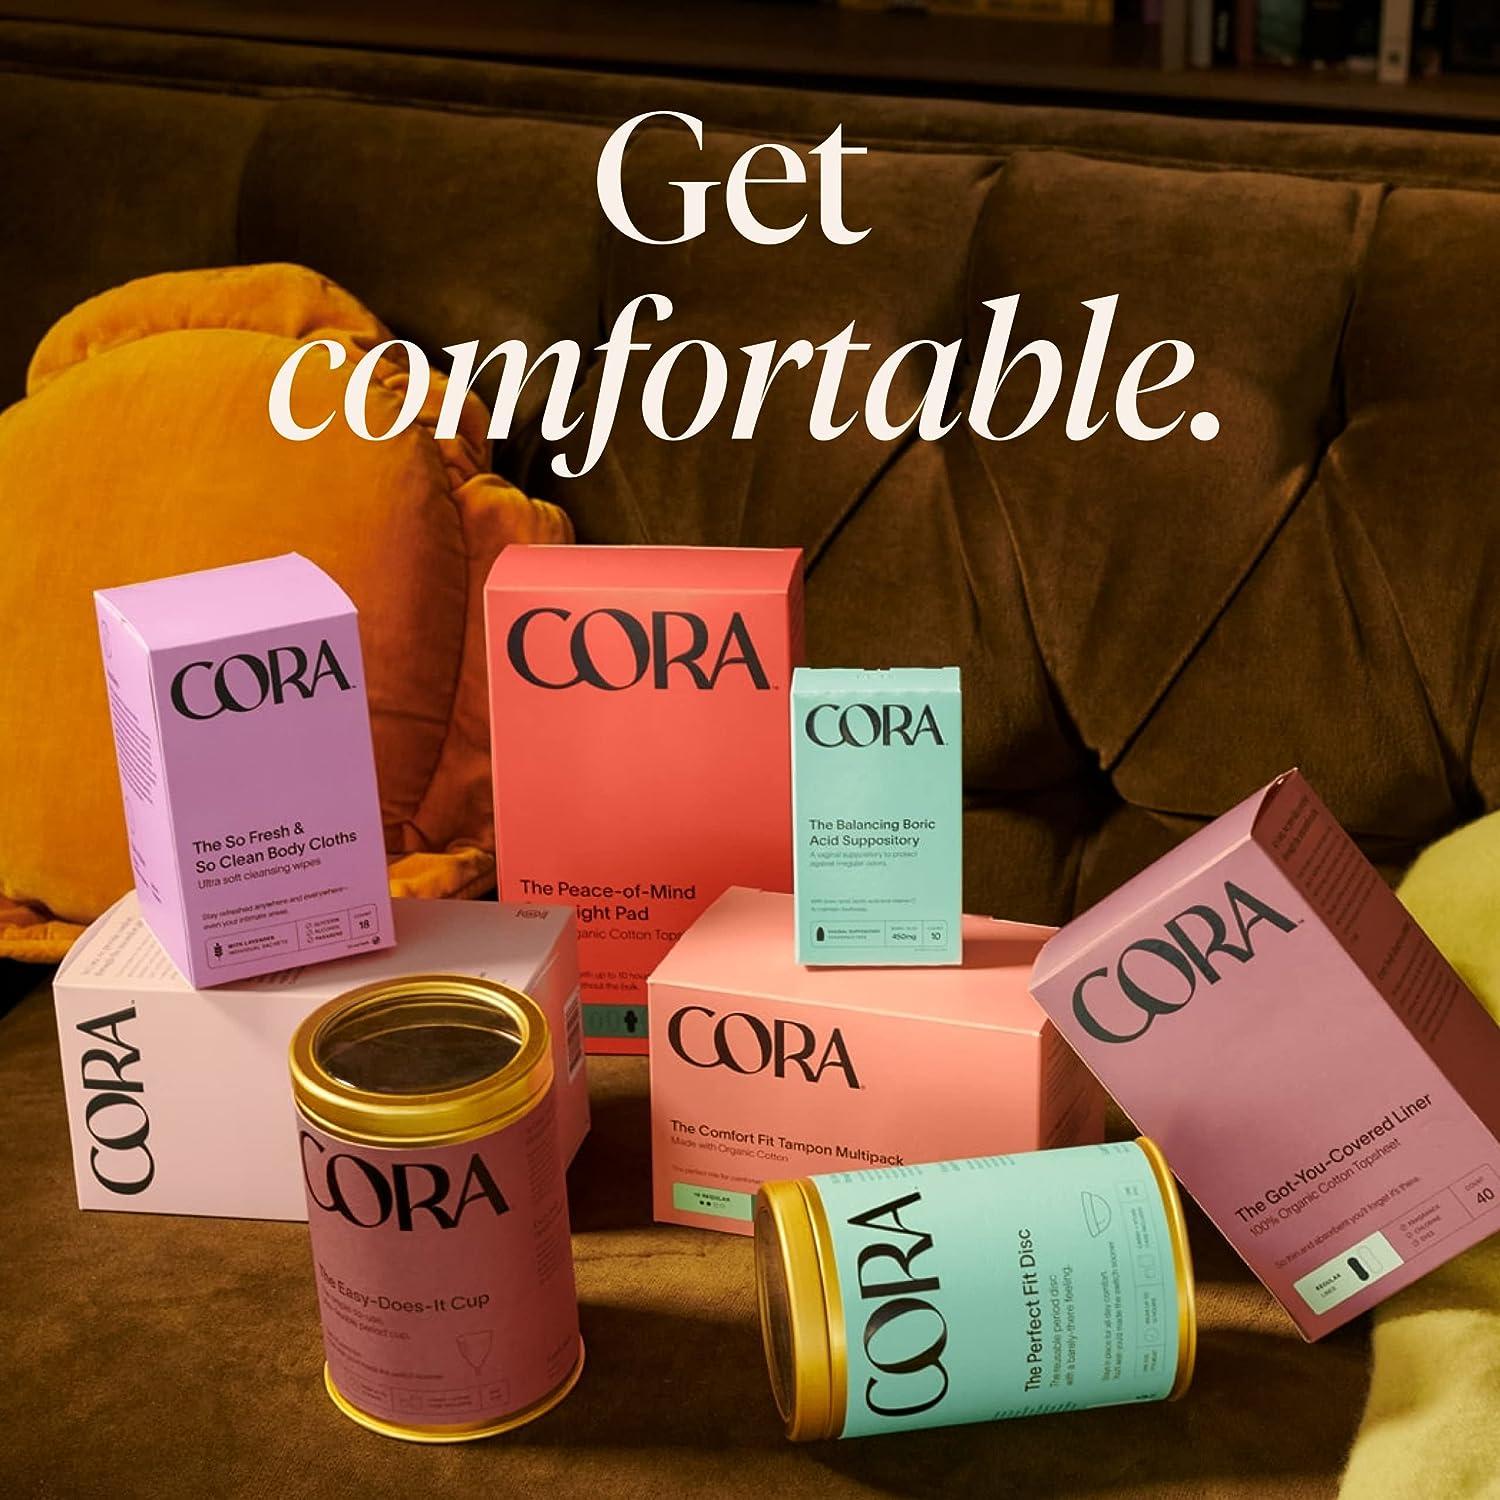 Cora Organic Tampons: Light, Feminine Hygiene